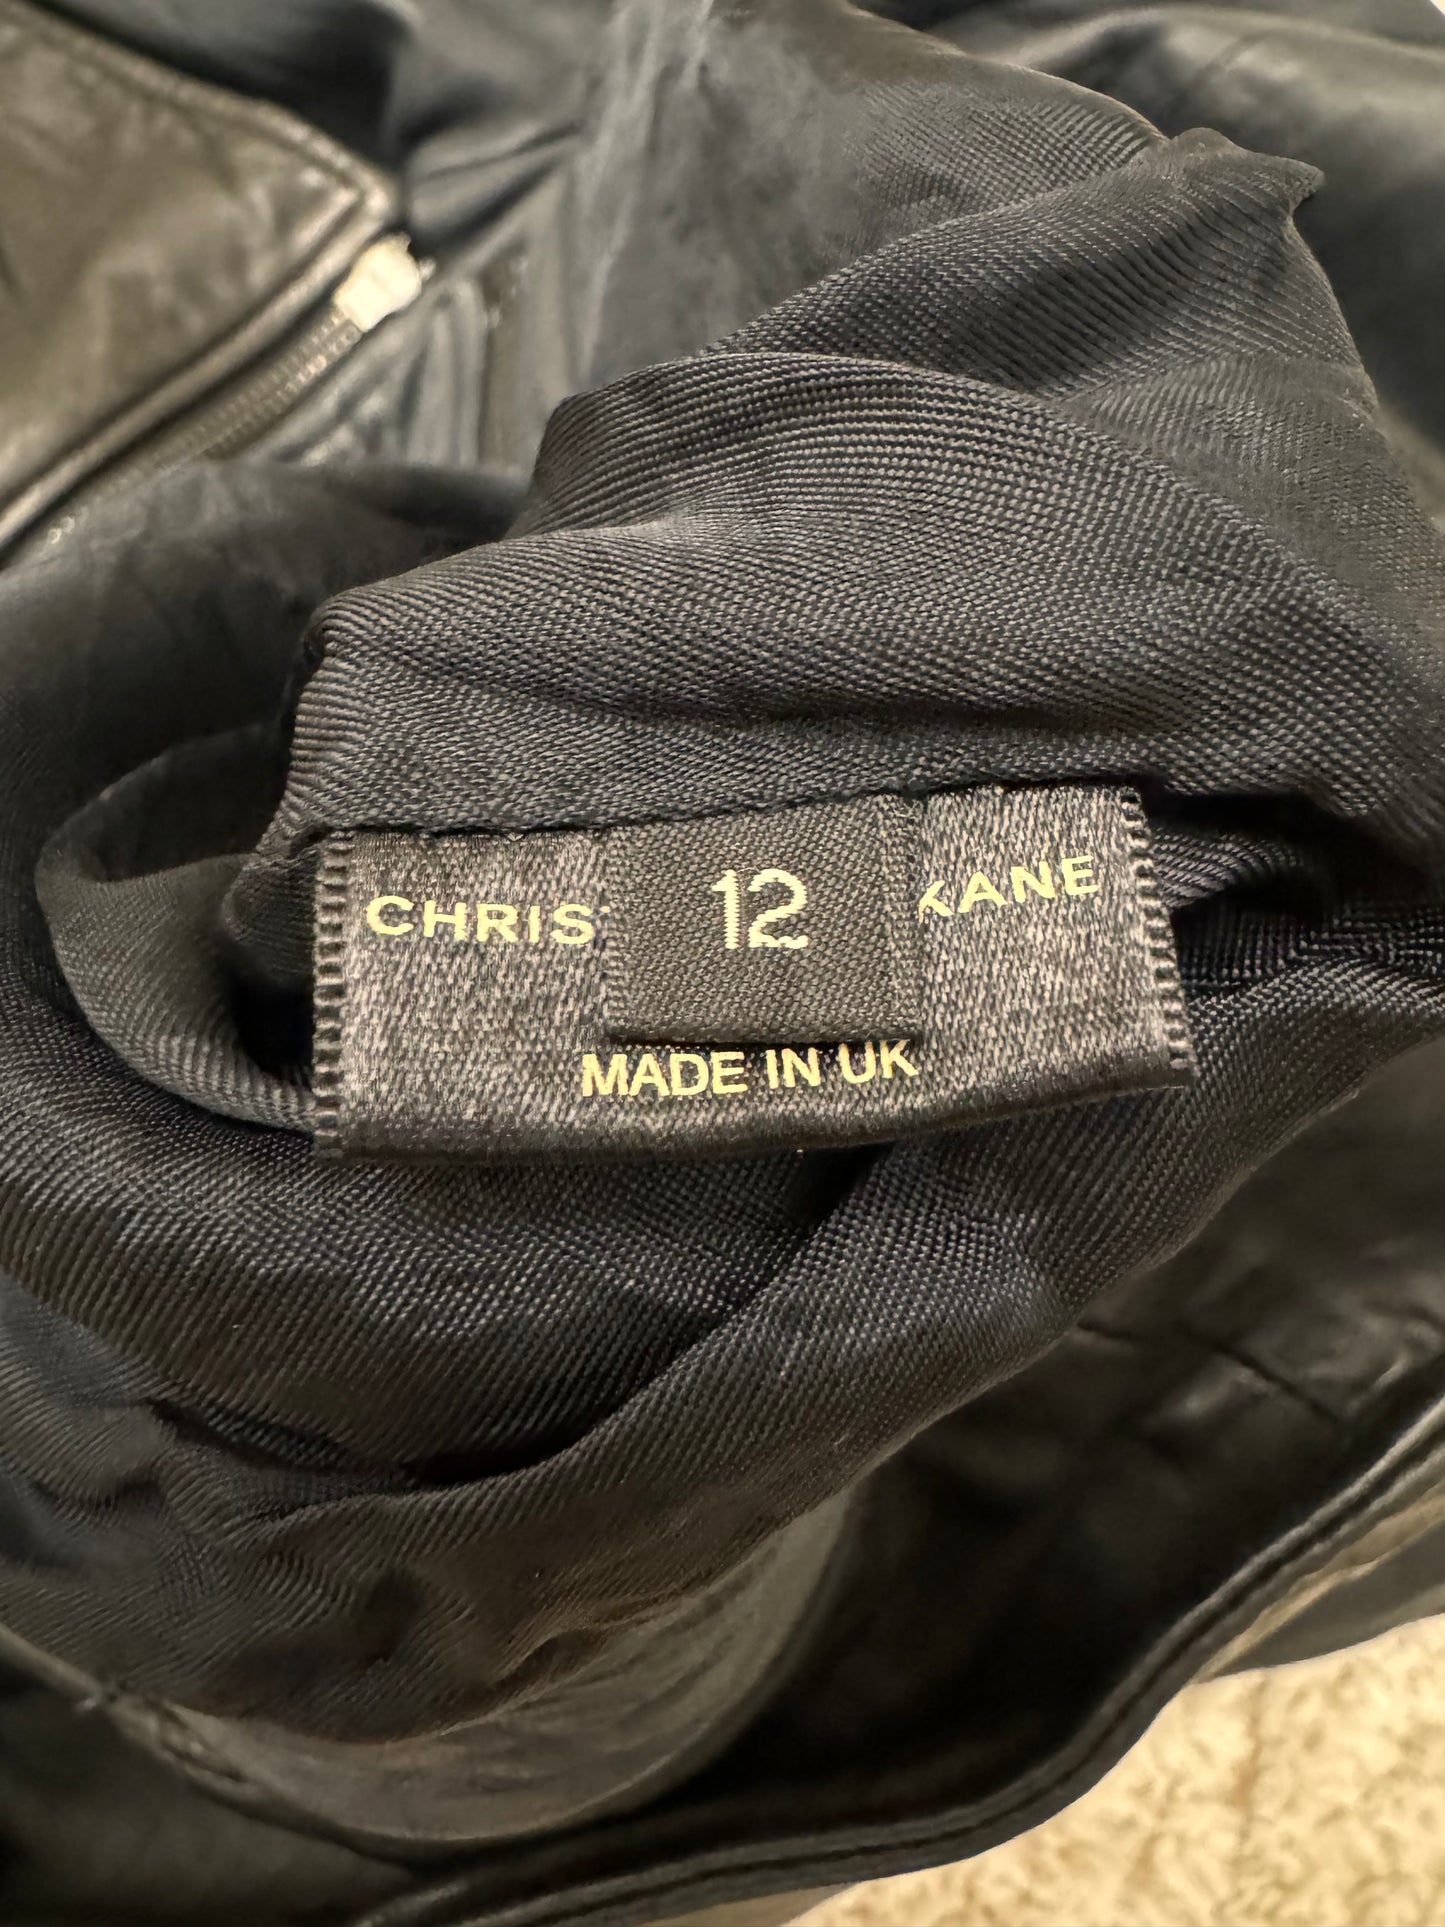 Christopher Kane Moto Multi-Zip Leather Jacket (XS)